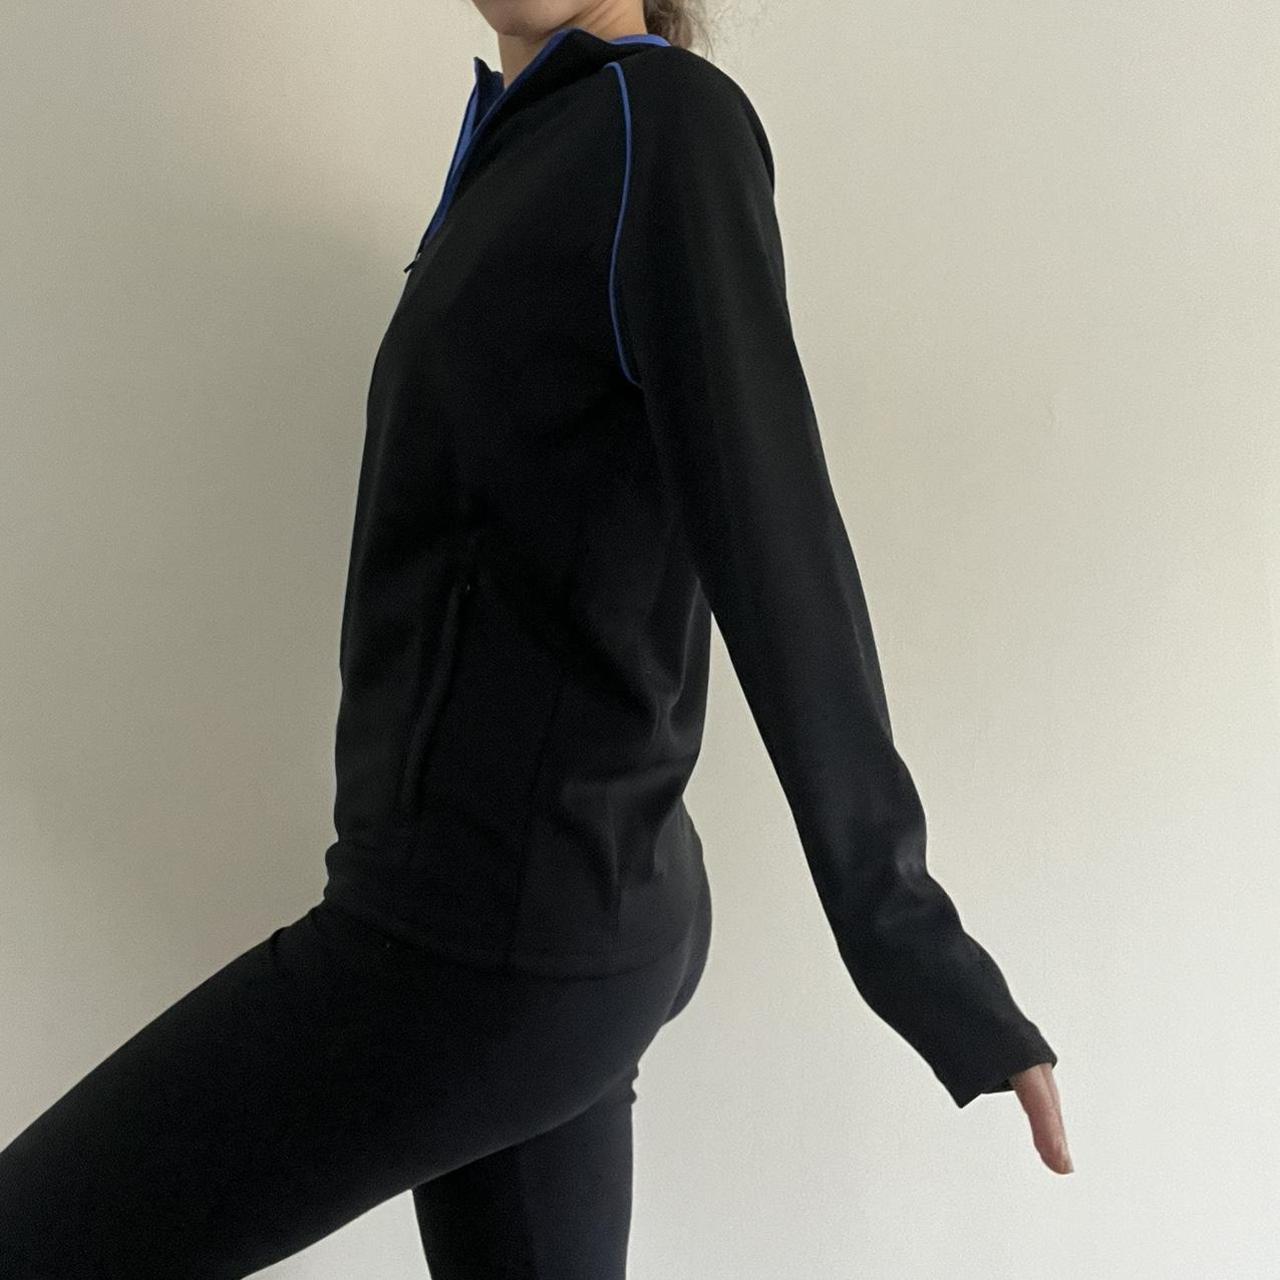 Slazenger Women's Black and Blue Sweatshirt (2)